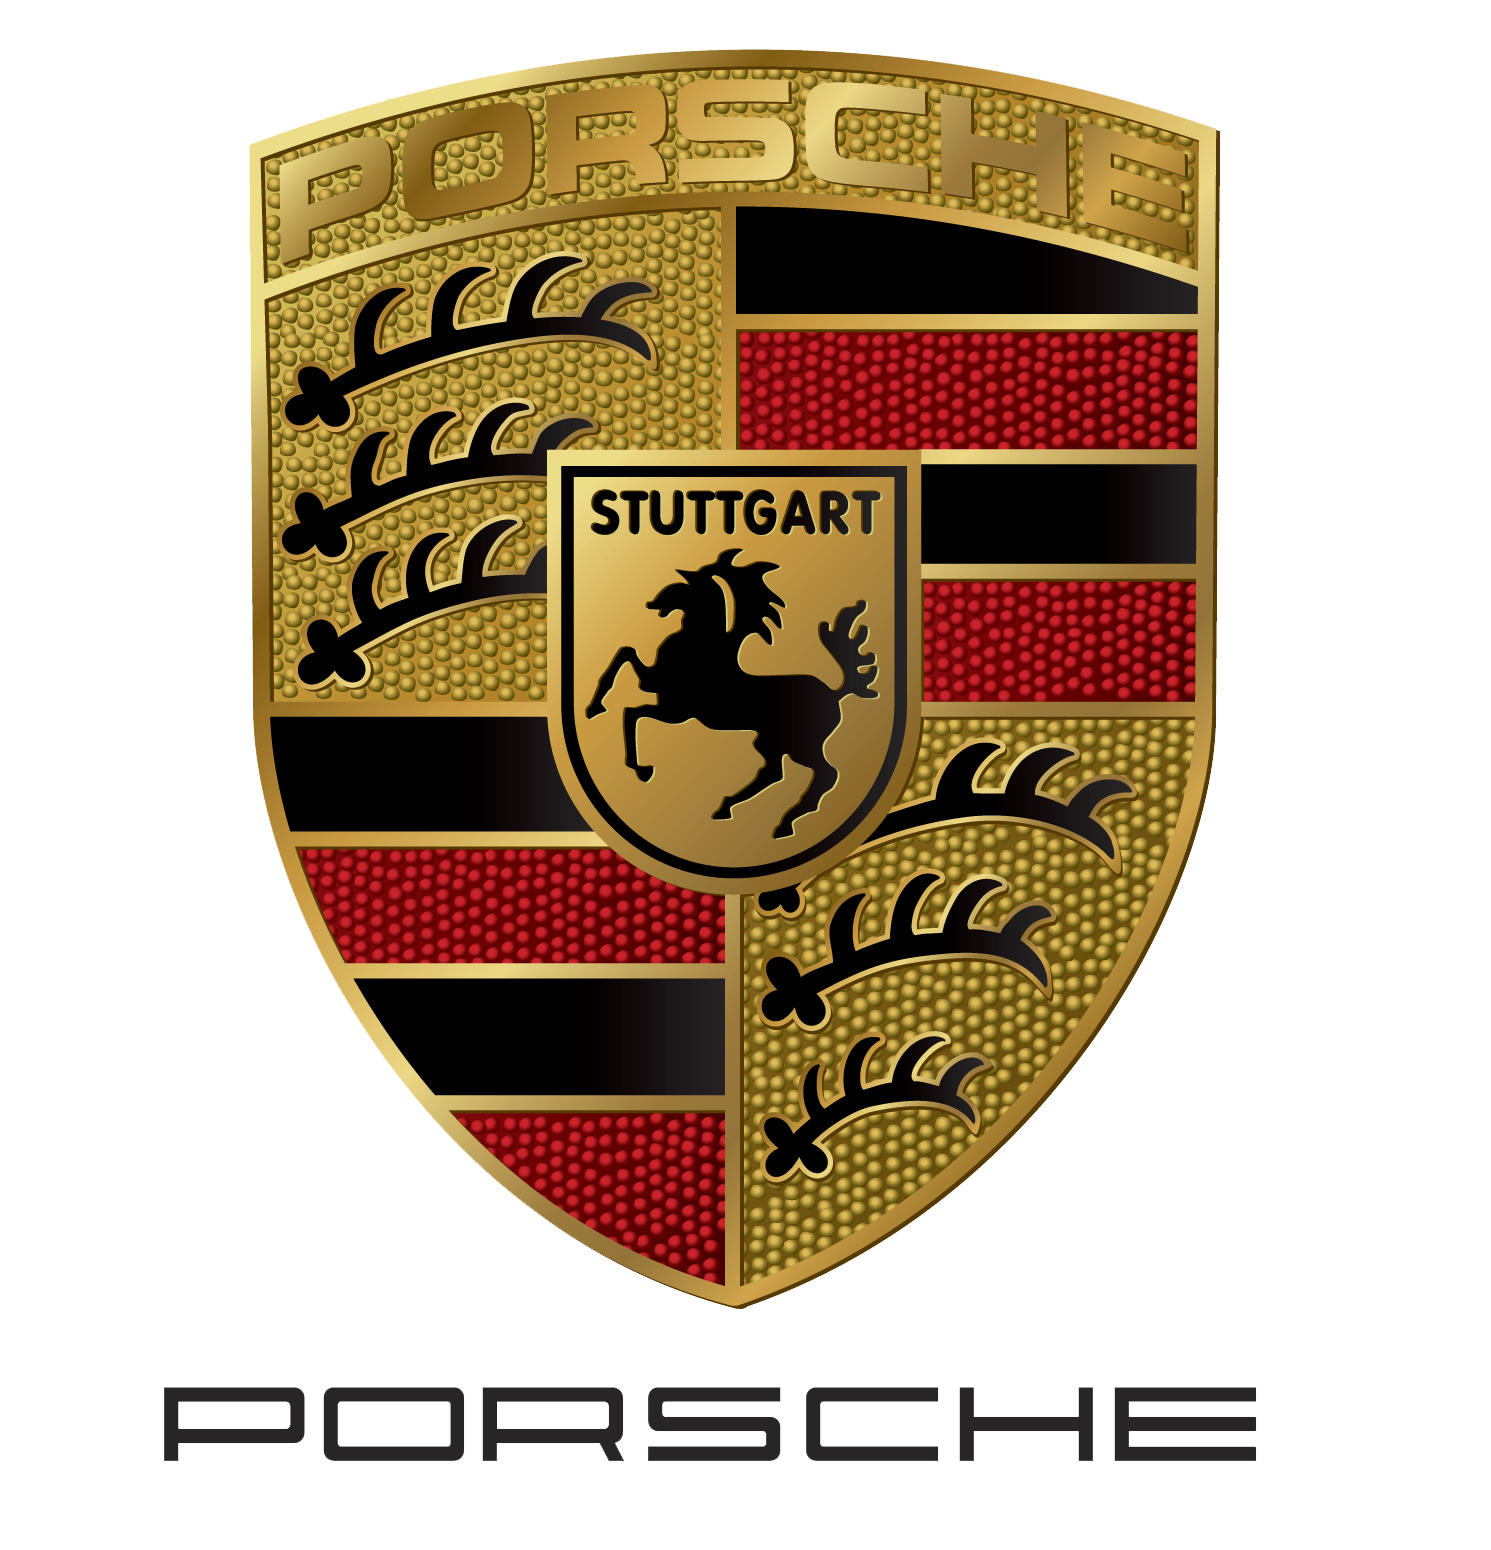 Free Porsche Logo Transparent, Download Free Porsche Logo Transparent